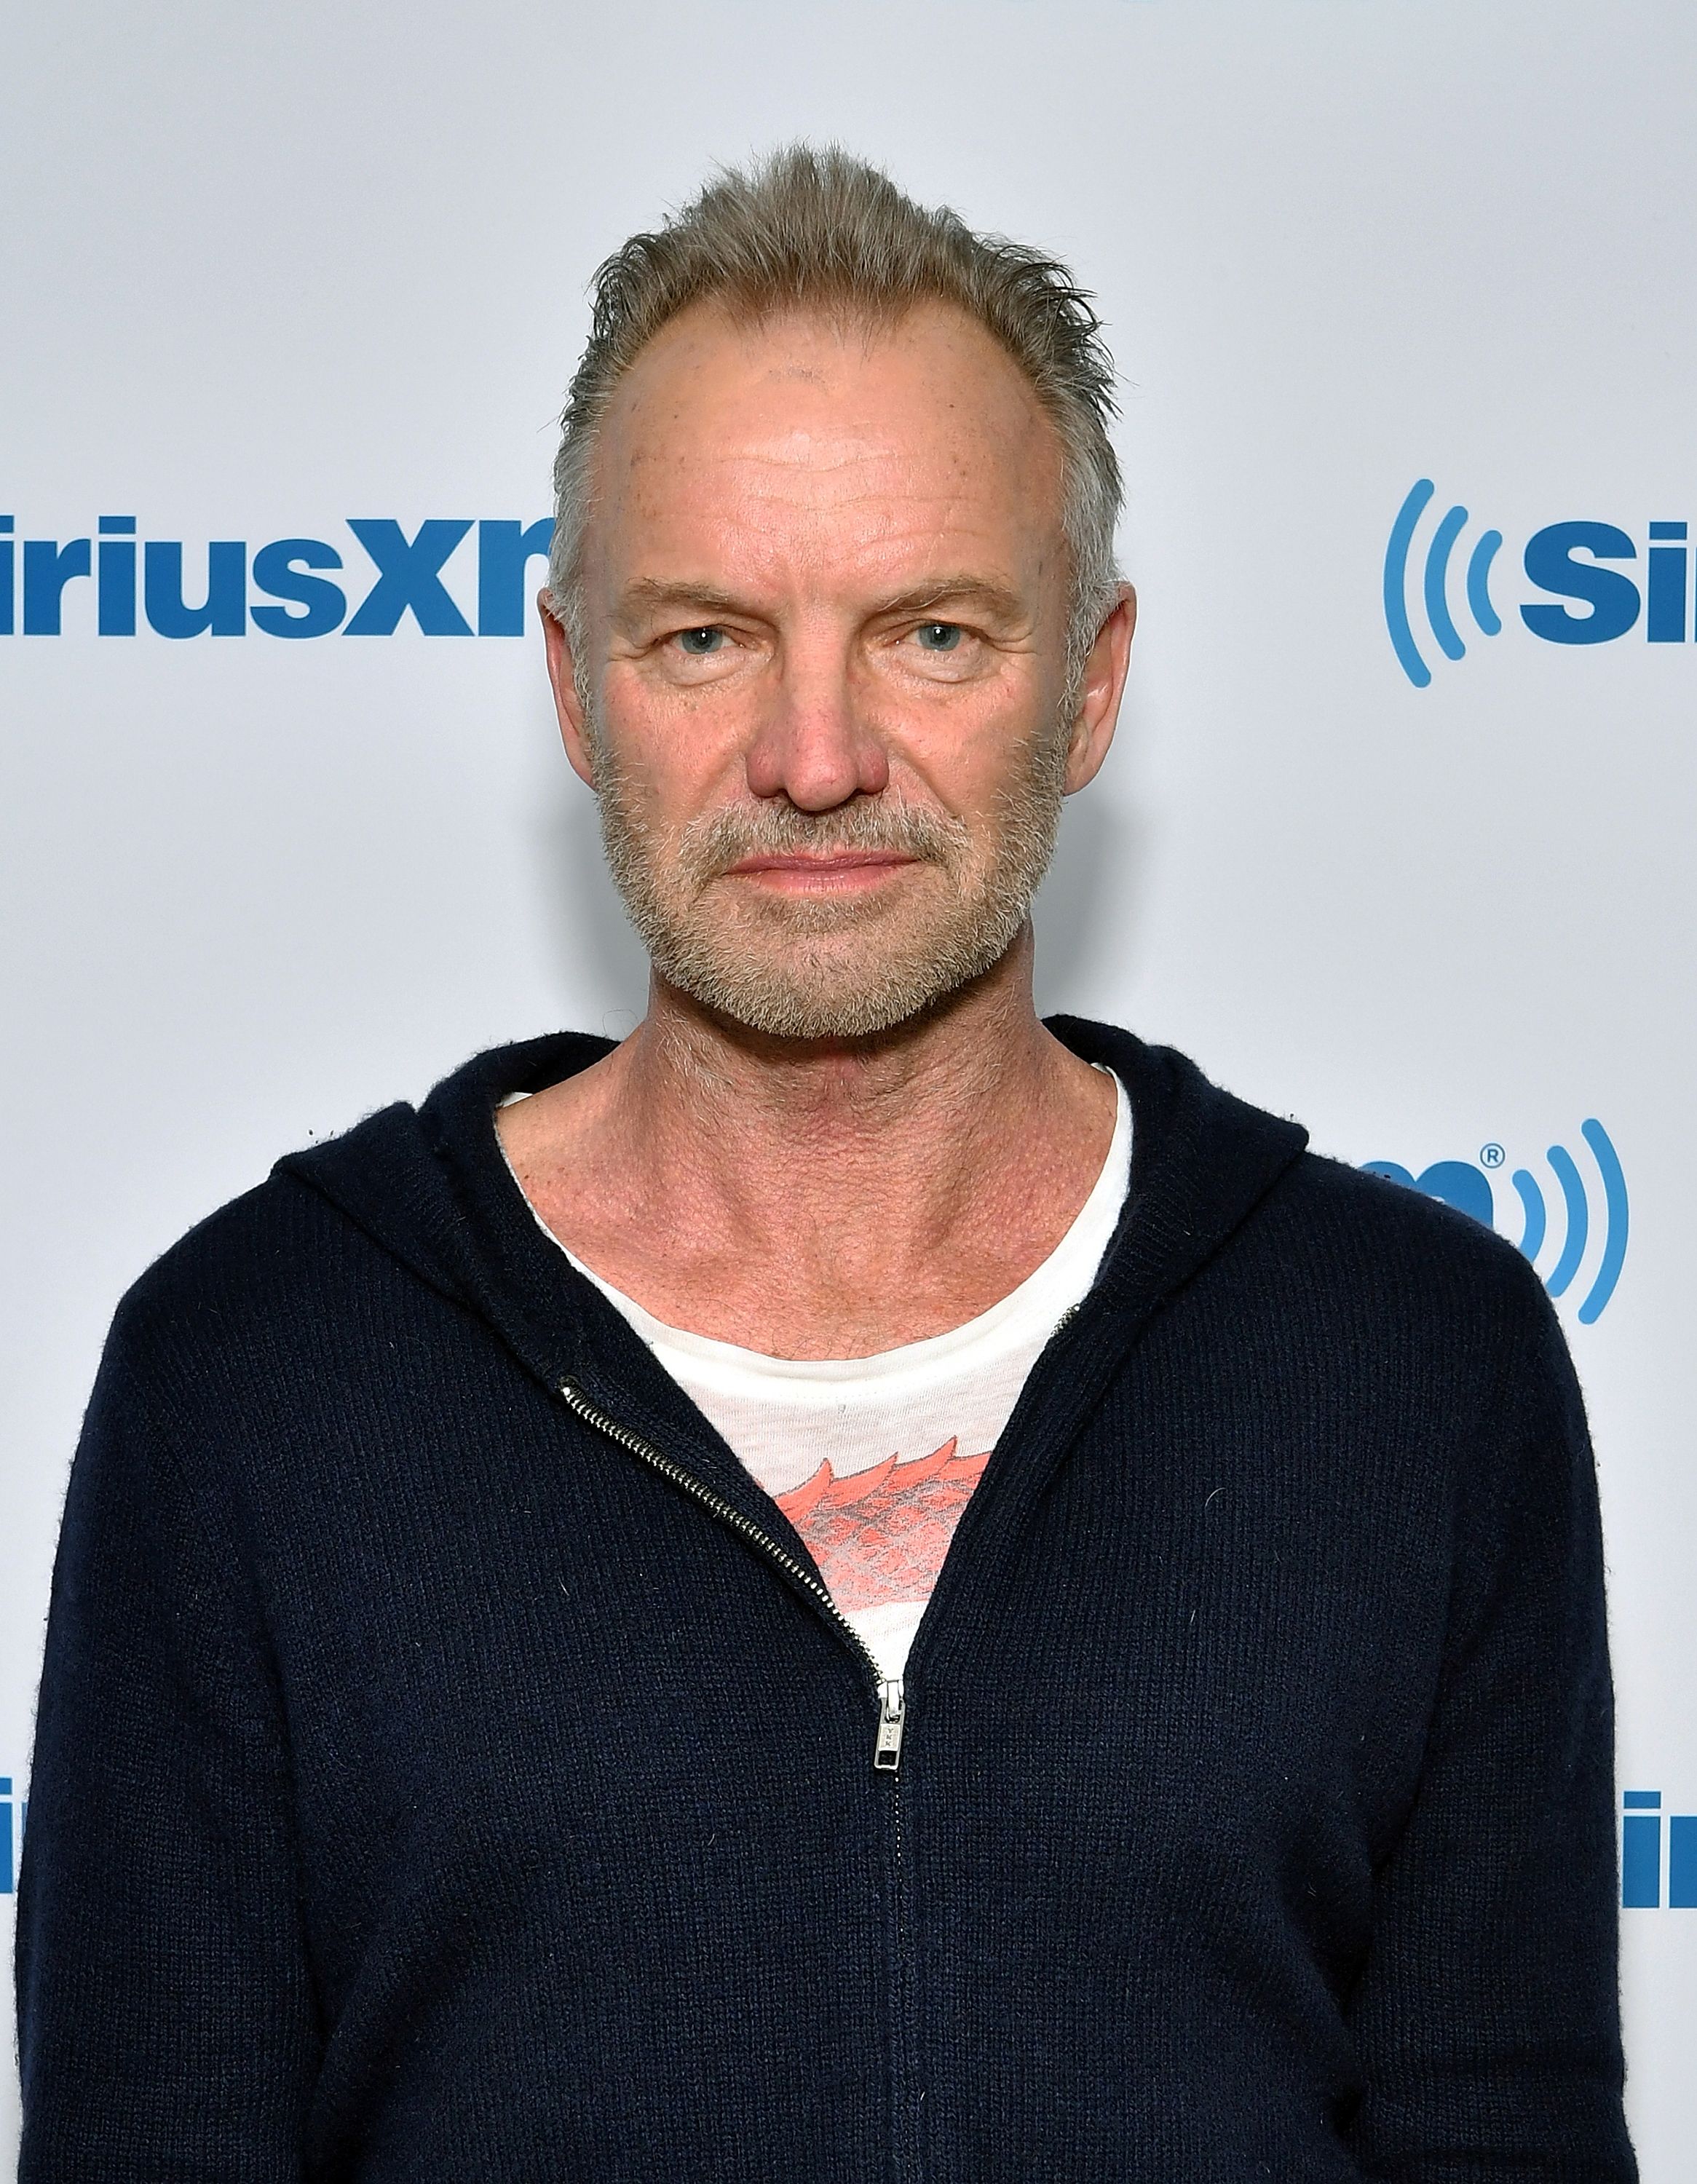 Sting besucht die SiriusXM Studios am 29. April 2019. | Quelle: Getty Images